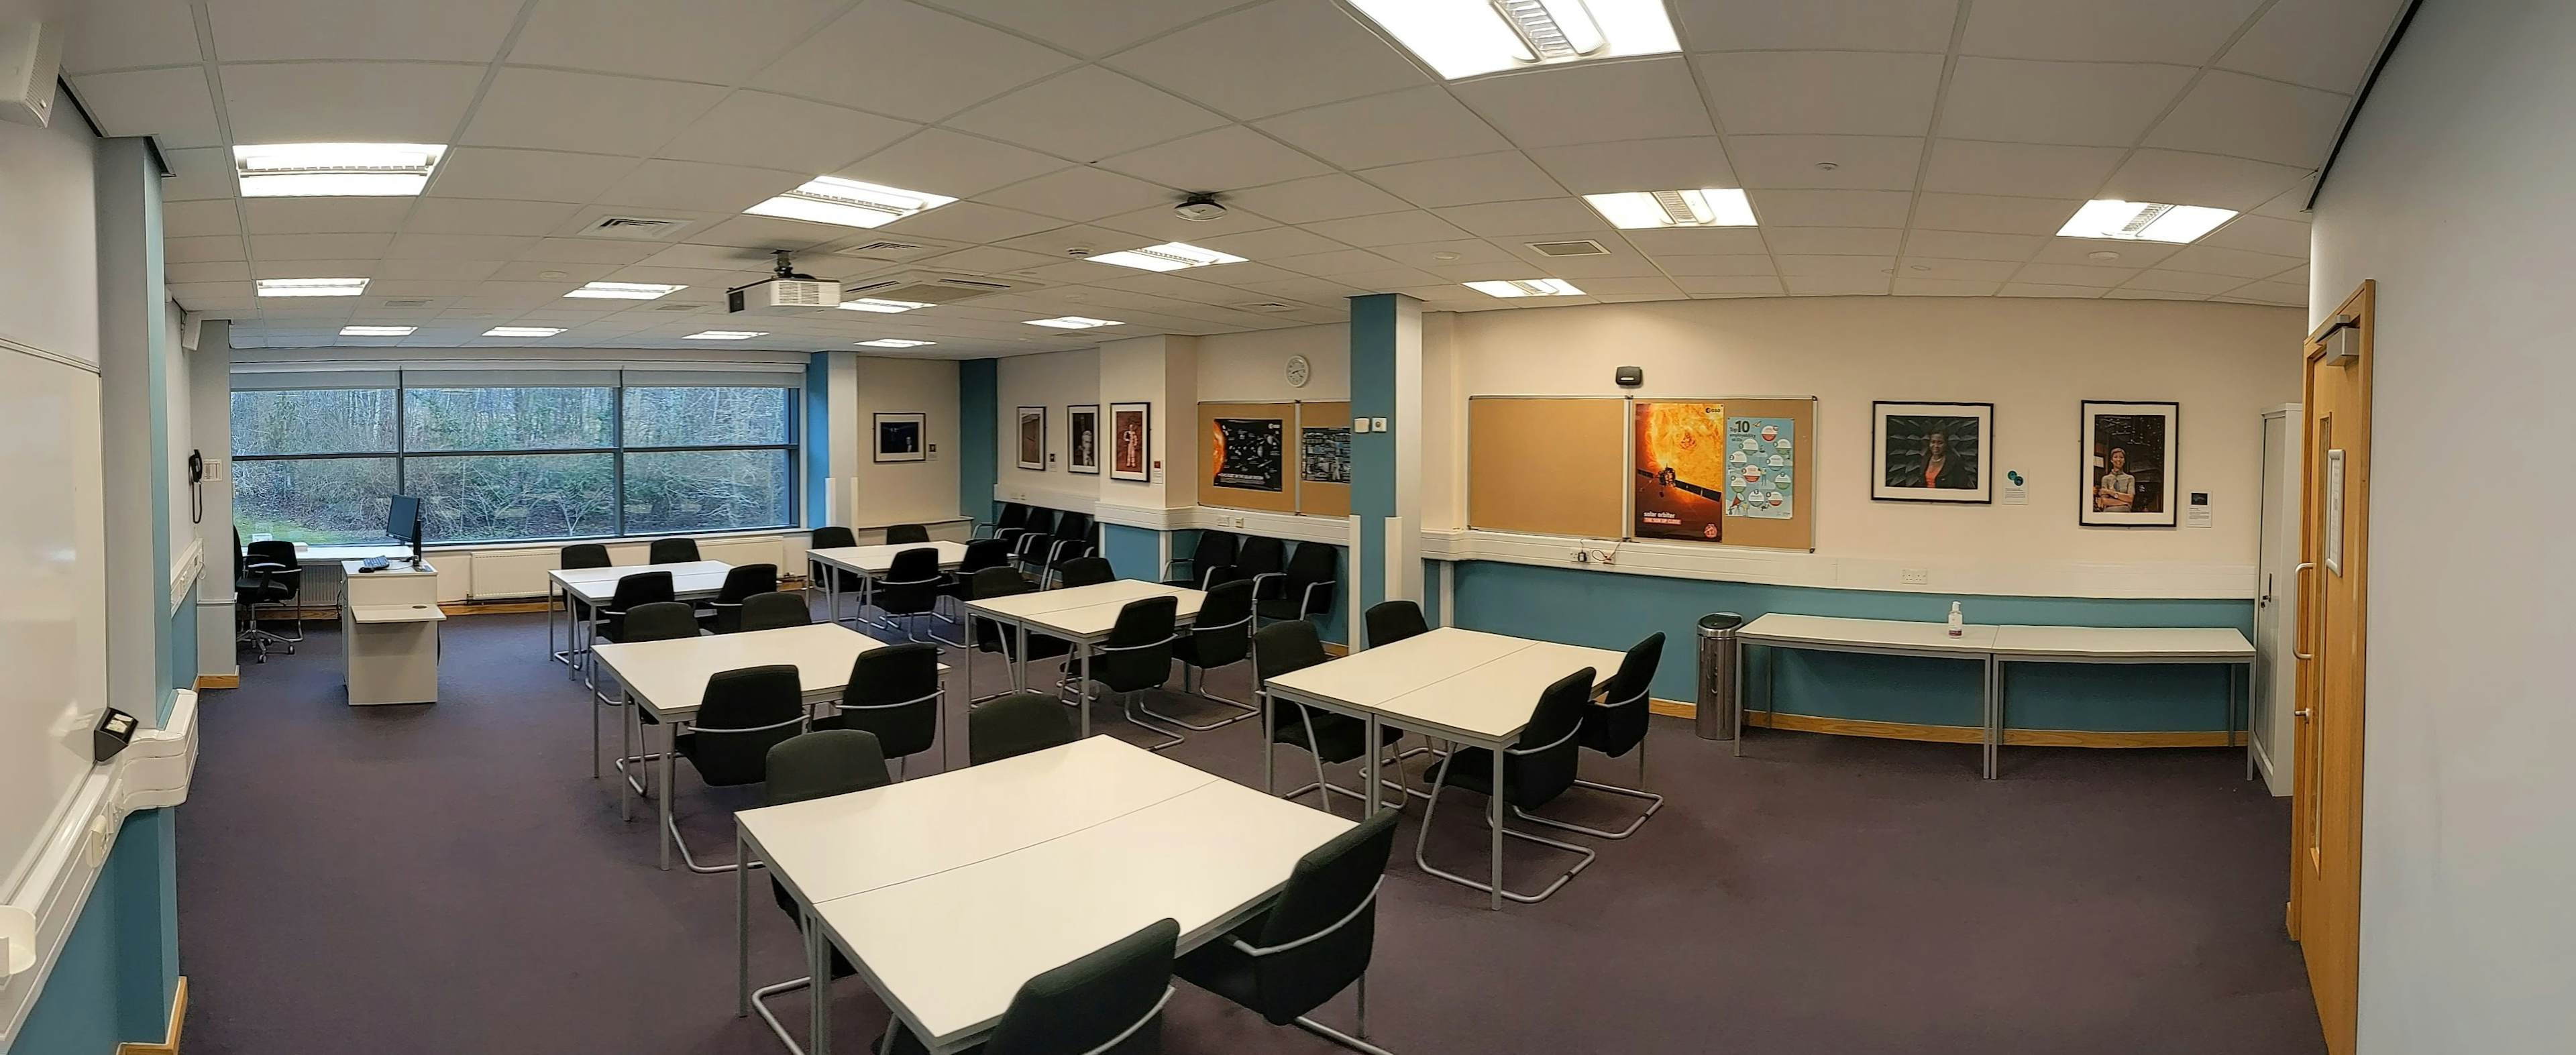 National STEM Learning Centre - Teaching room image 1